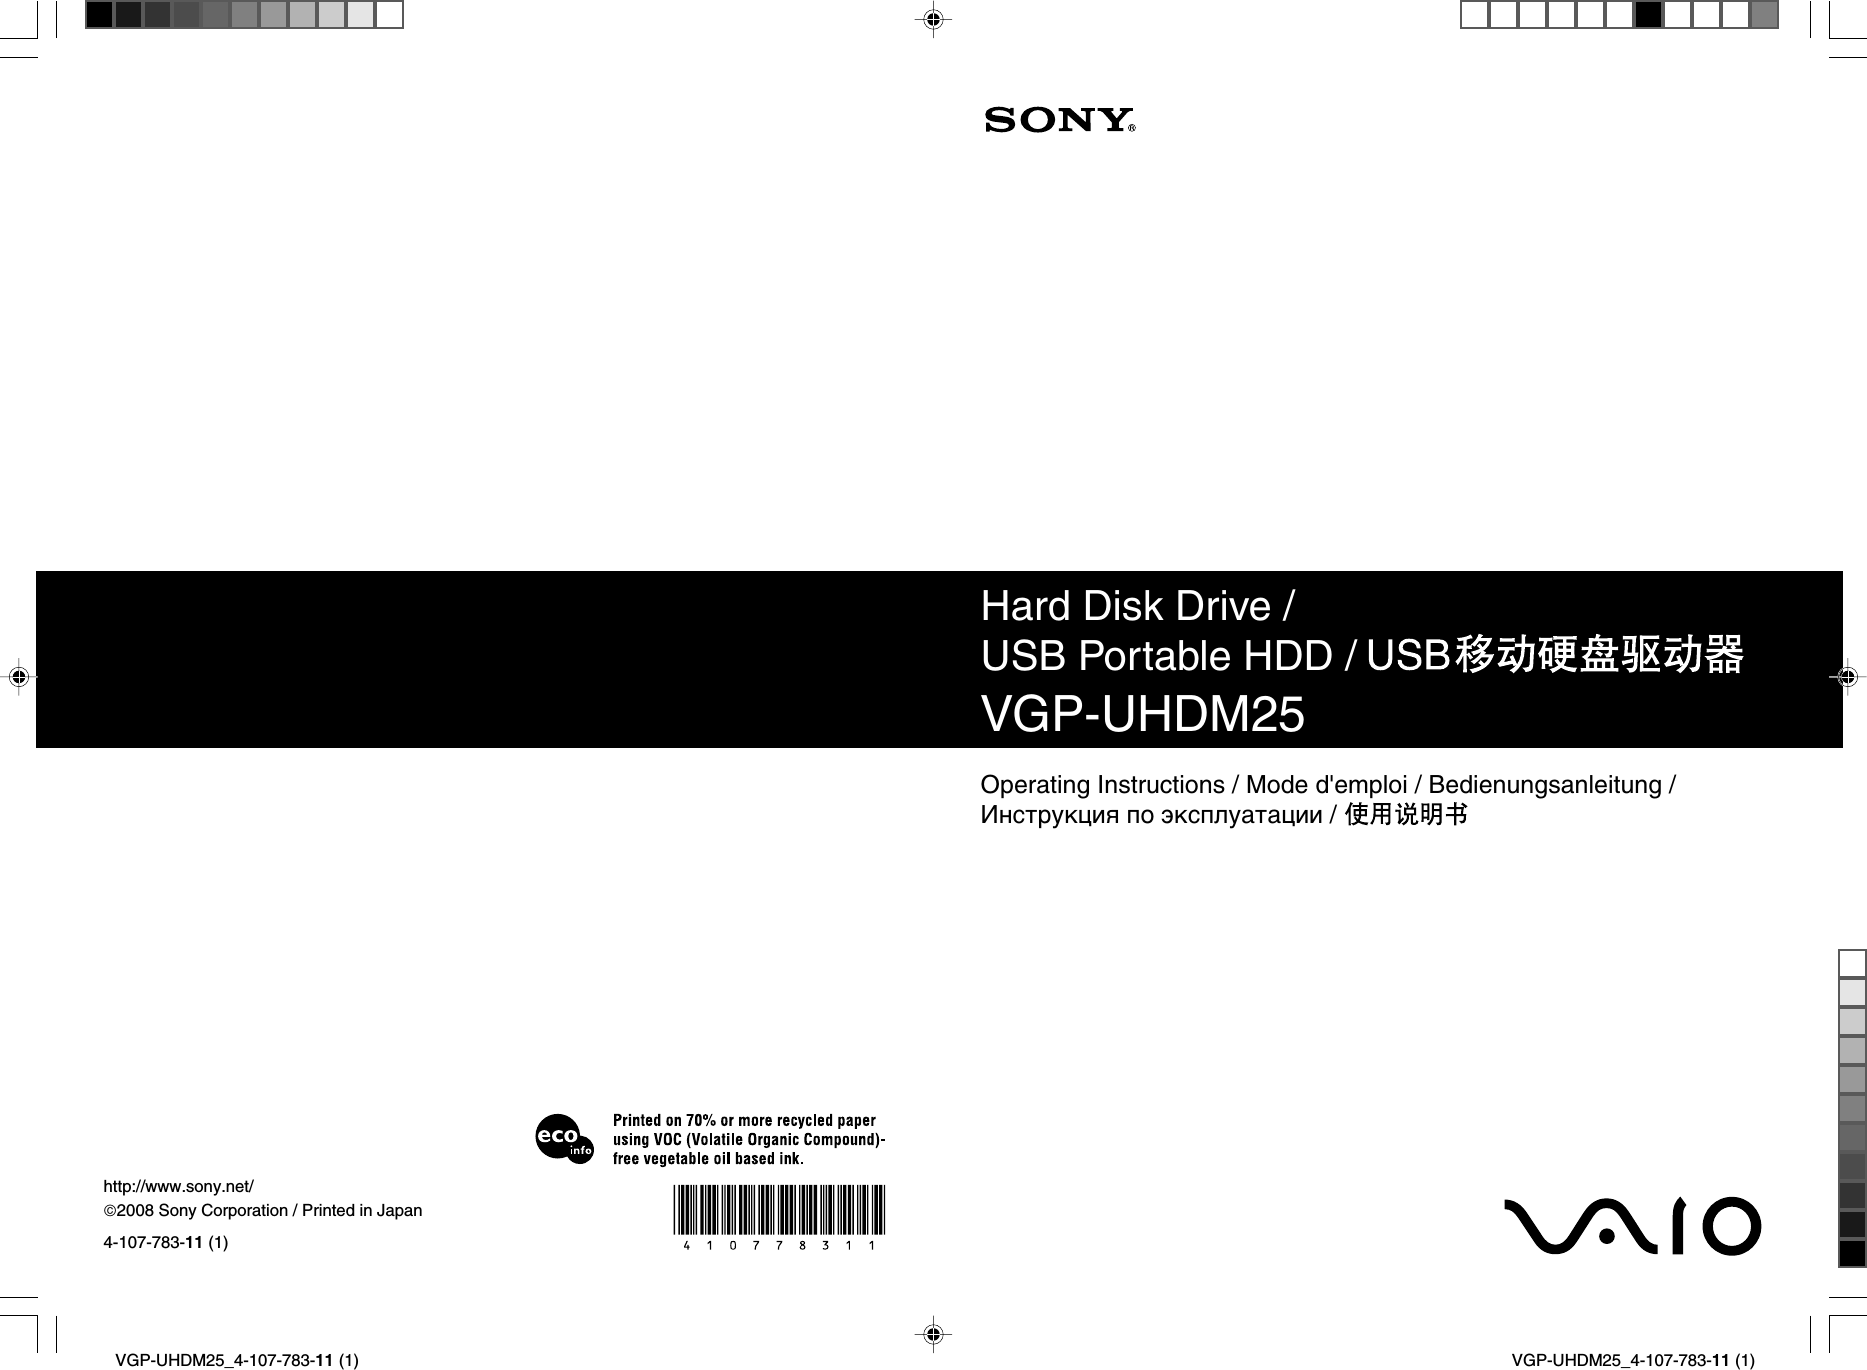 VGP-UHDM25_4-107-783-11 (1)VGP-UHDM25_4-107-783-11 (1)2008 Sony Corporation / Printed in JapanHard Disk Drive /USB Portable HDD / VGP-UHDM254-107-783-11 (1)Operating Instructions / Mode d&apos;emploi / Bedienungsanleitung /Инcтpyкция по экcплyaтaции / http://www.sony.net/